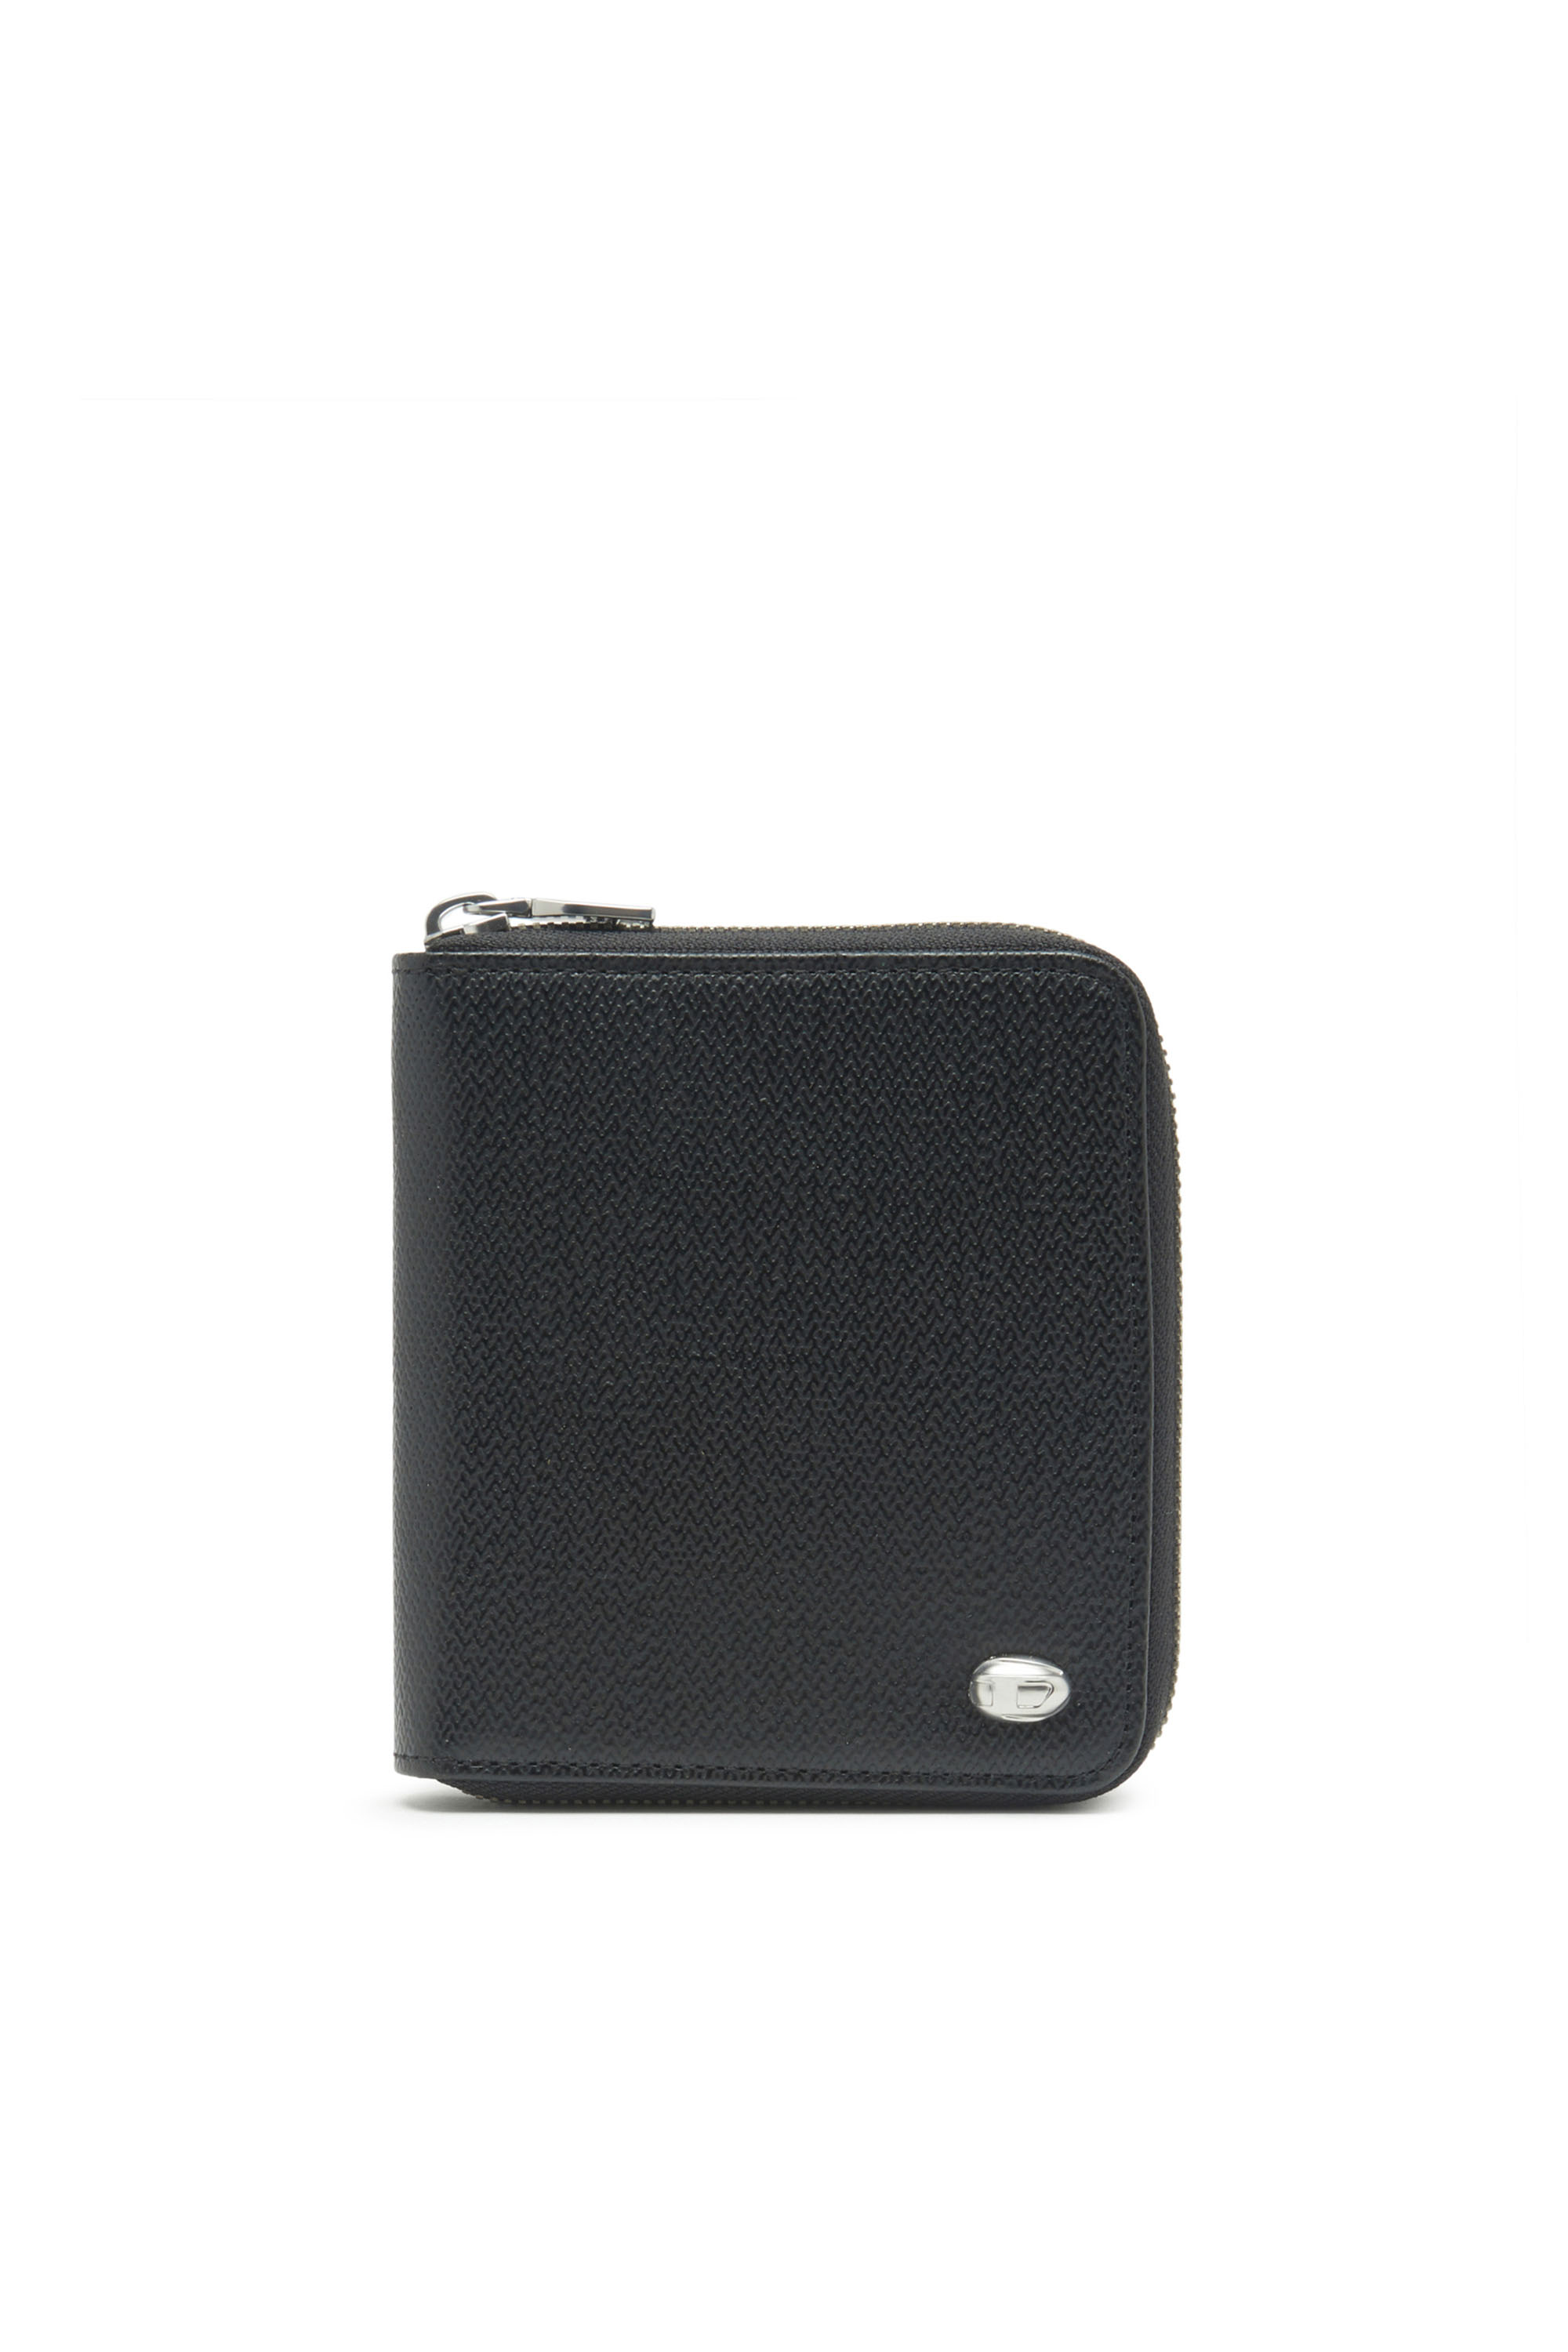 Diesel - Zip wallet in textured leather - Small Wallets - Man - Black